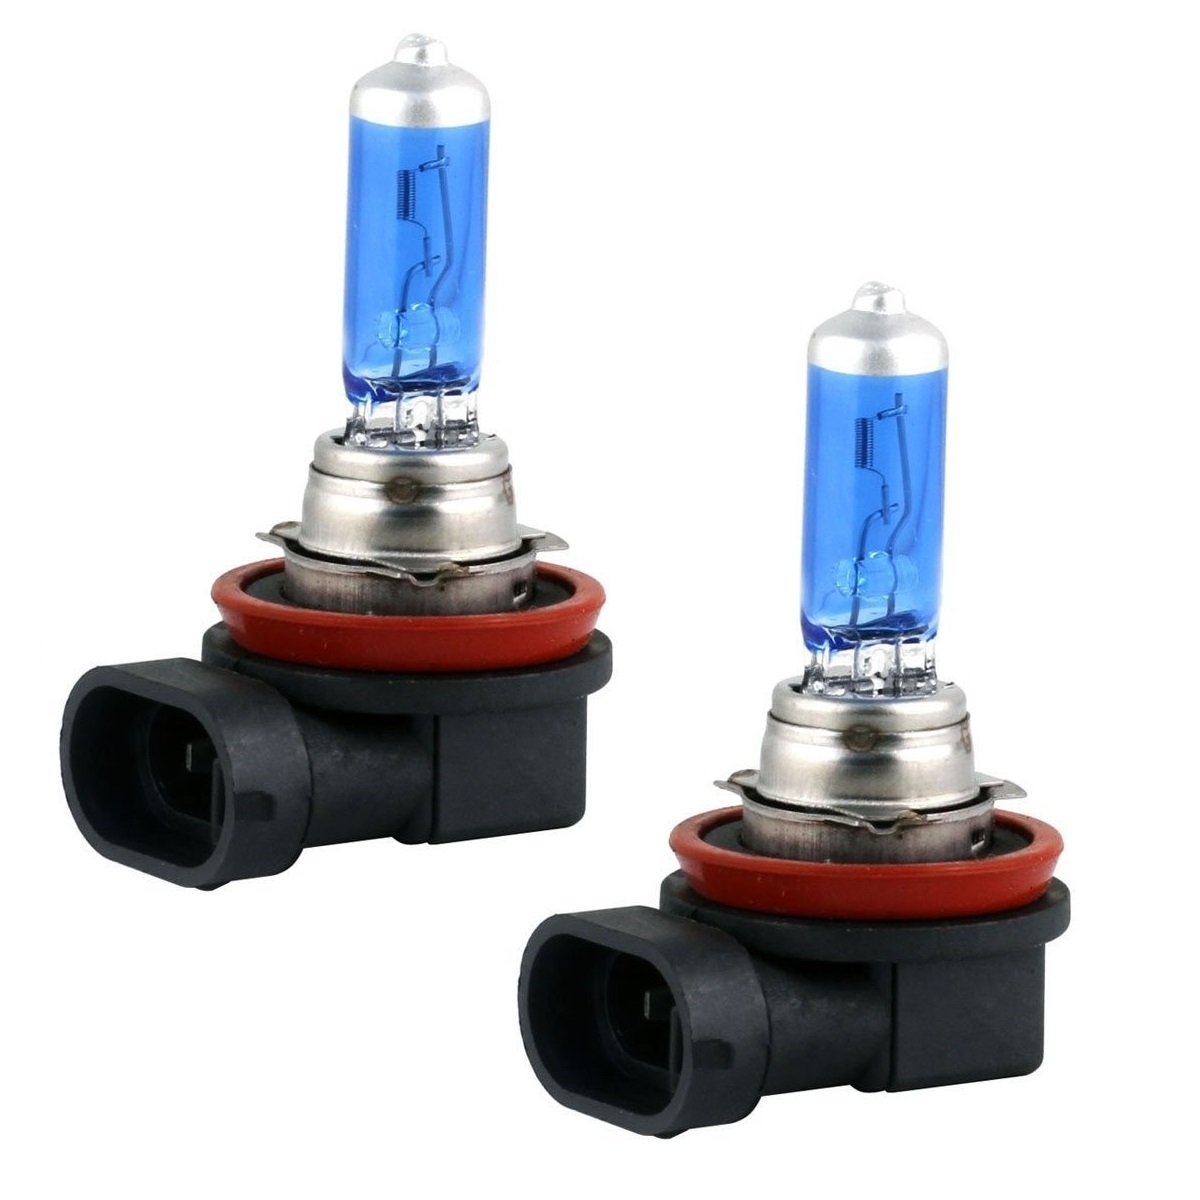 2x H11 12V 55W Xenon White 5000k Halogen Blue Car Headlight Lamp Globes Bulb HID